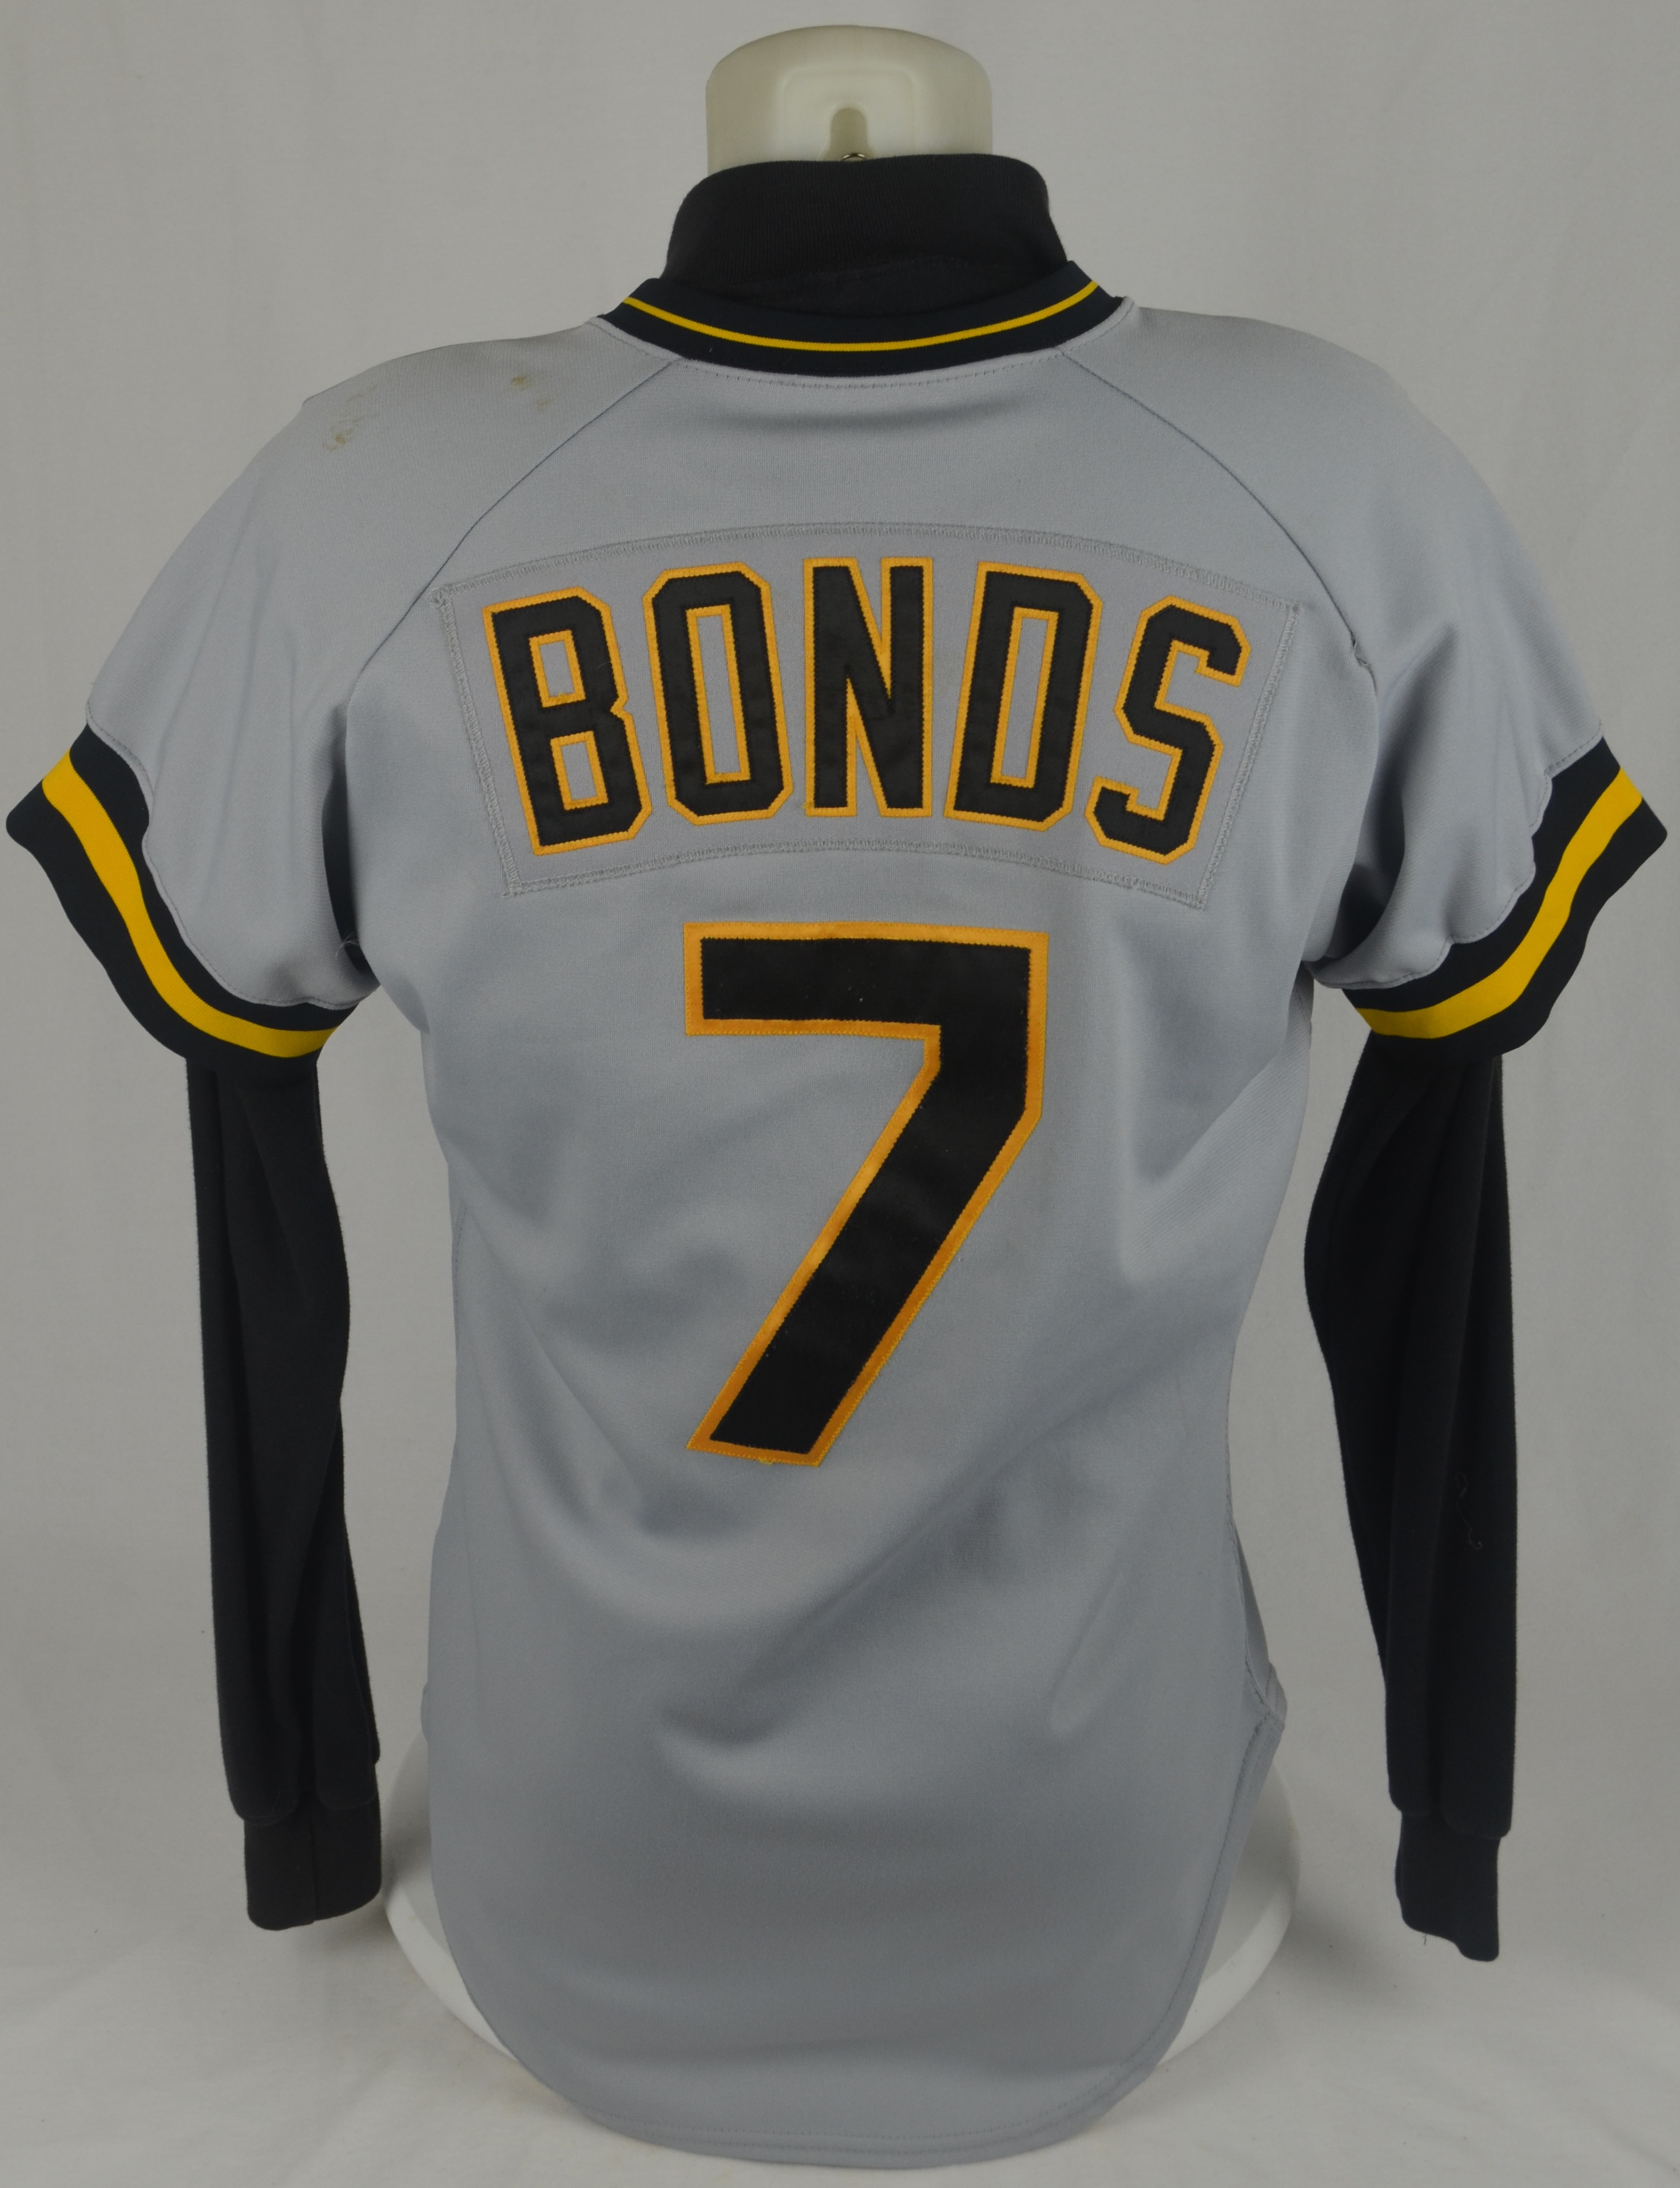 Barry Bonds Pirates jersey